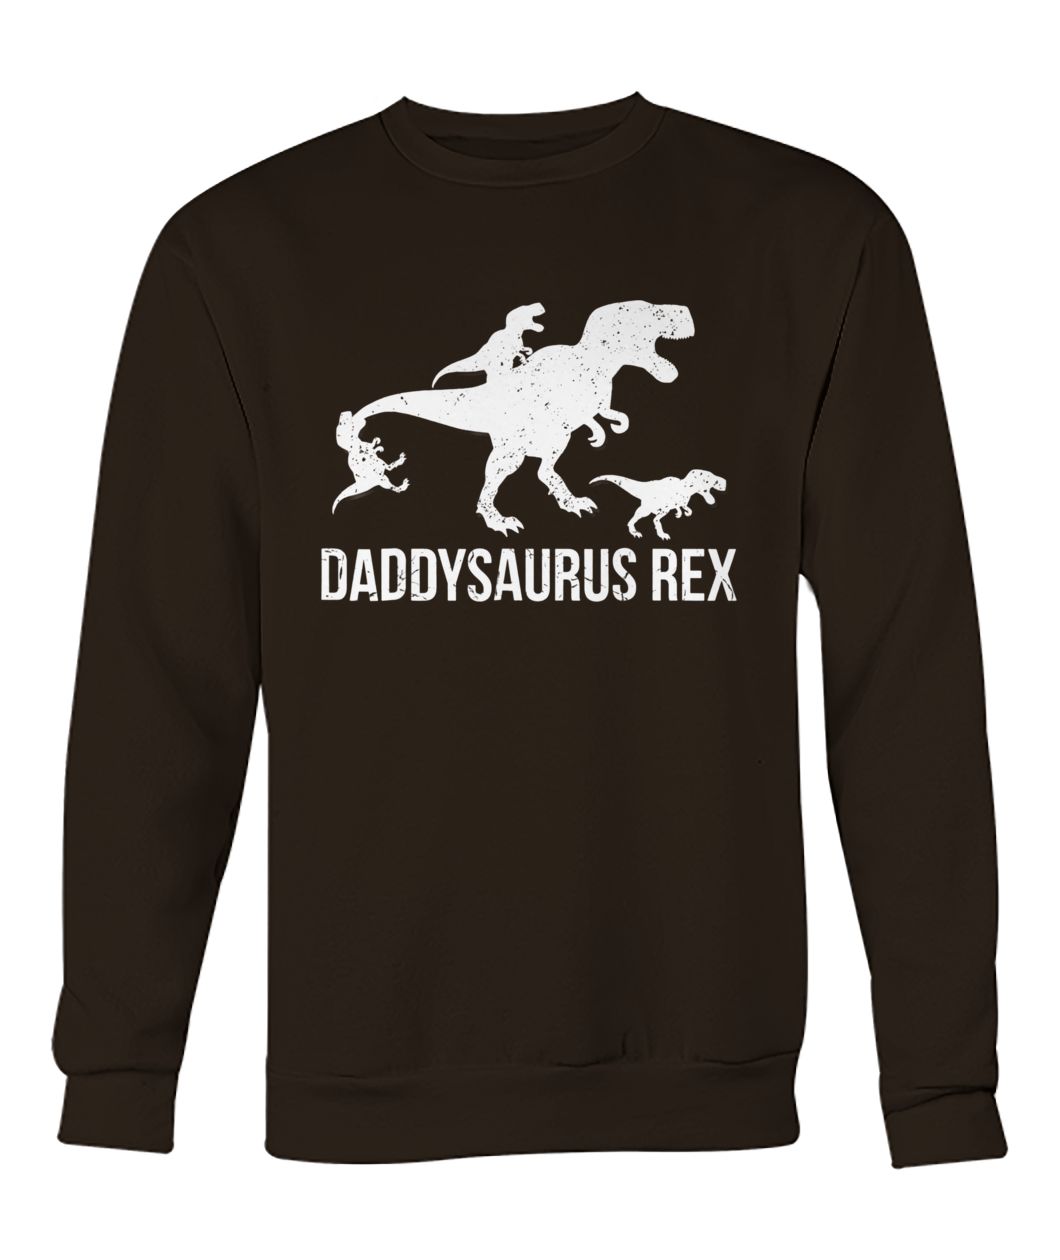 Daddysaurus rex 3 kids crew neck sweatshirt